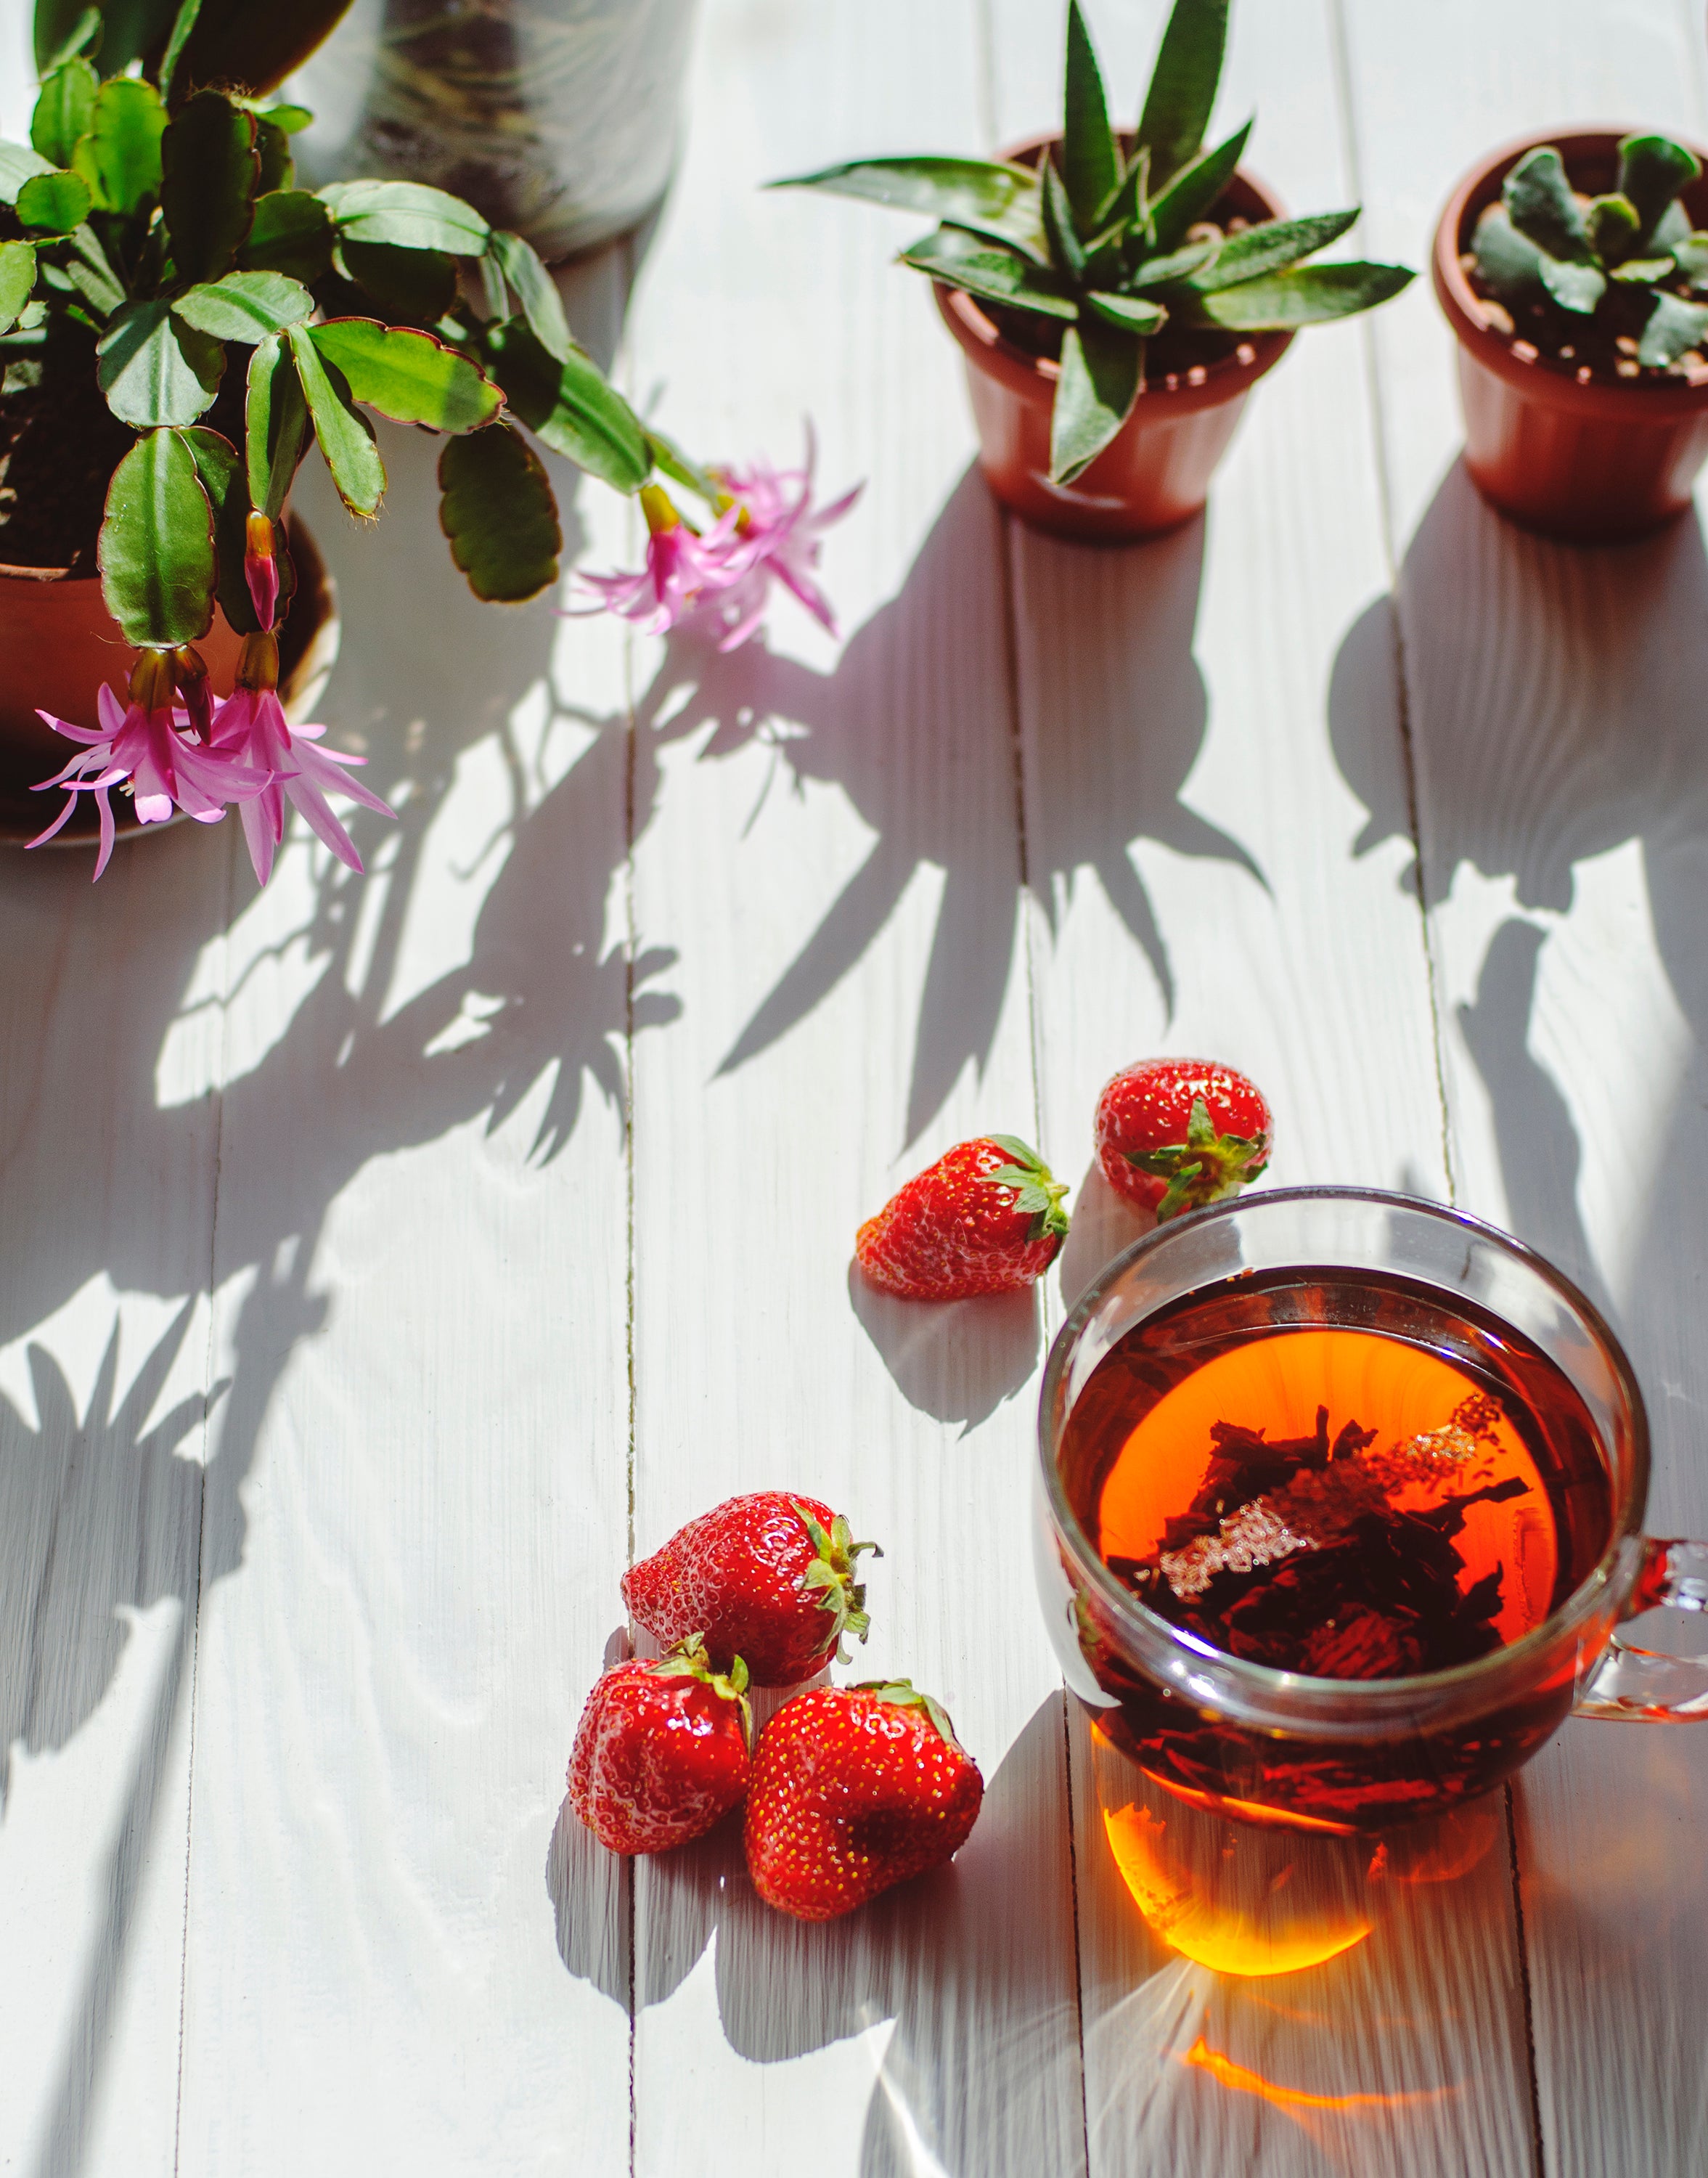 Torani Puremade Flavor Syrup: 750ml Glass Bottle: Strawberry